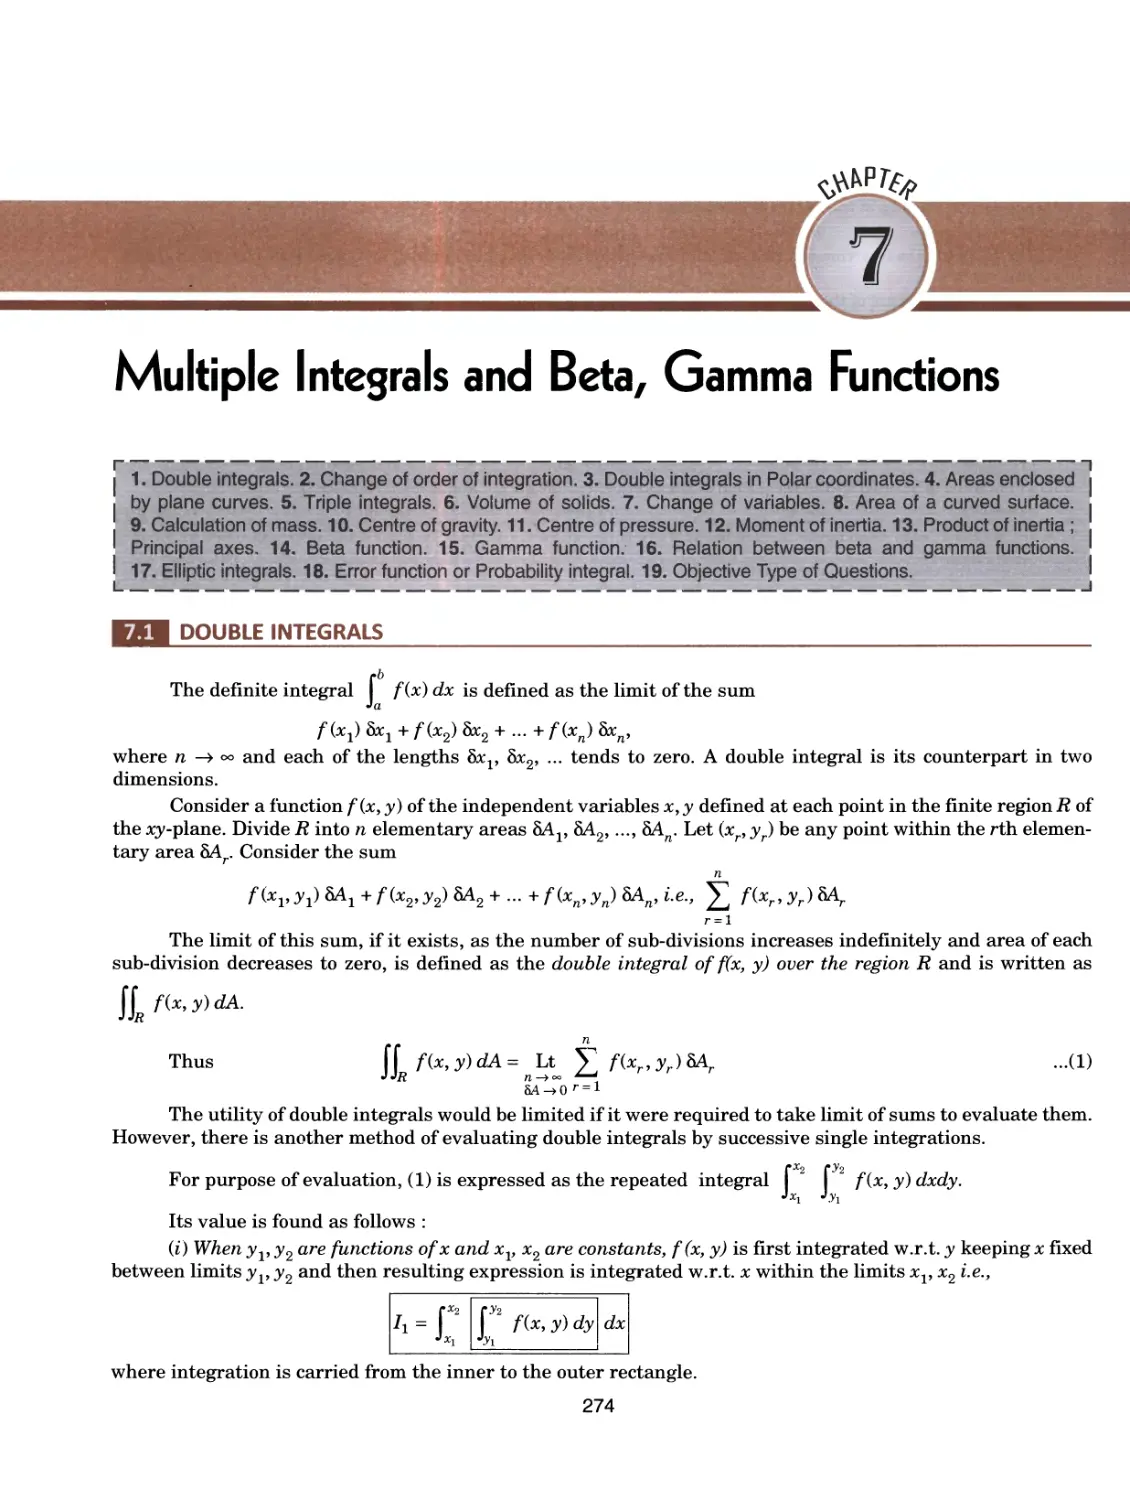 7.Multiple Integrals & Beta, Gamma Functions 274